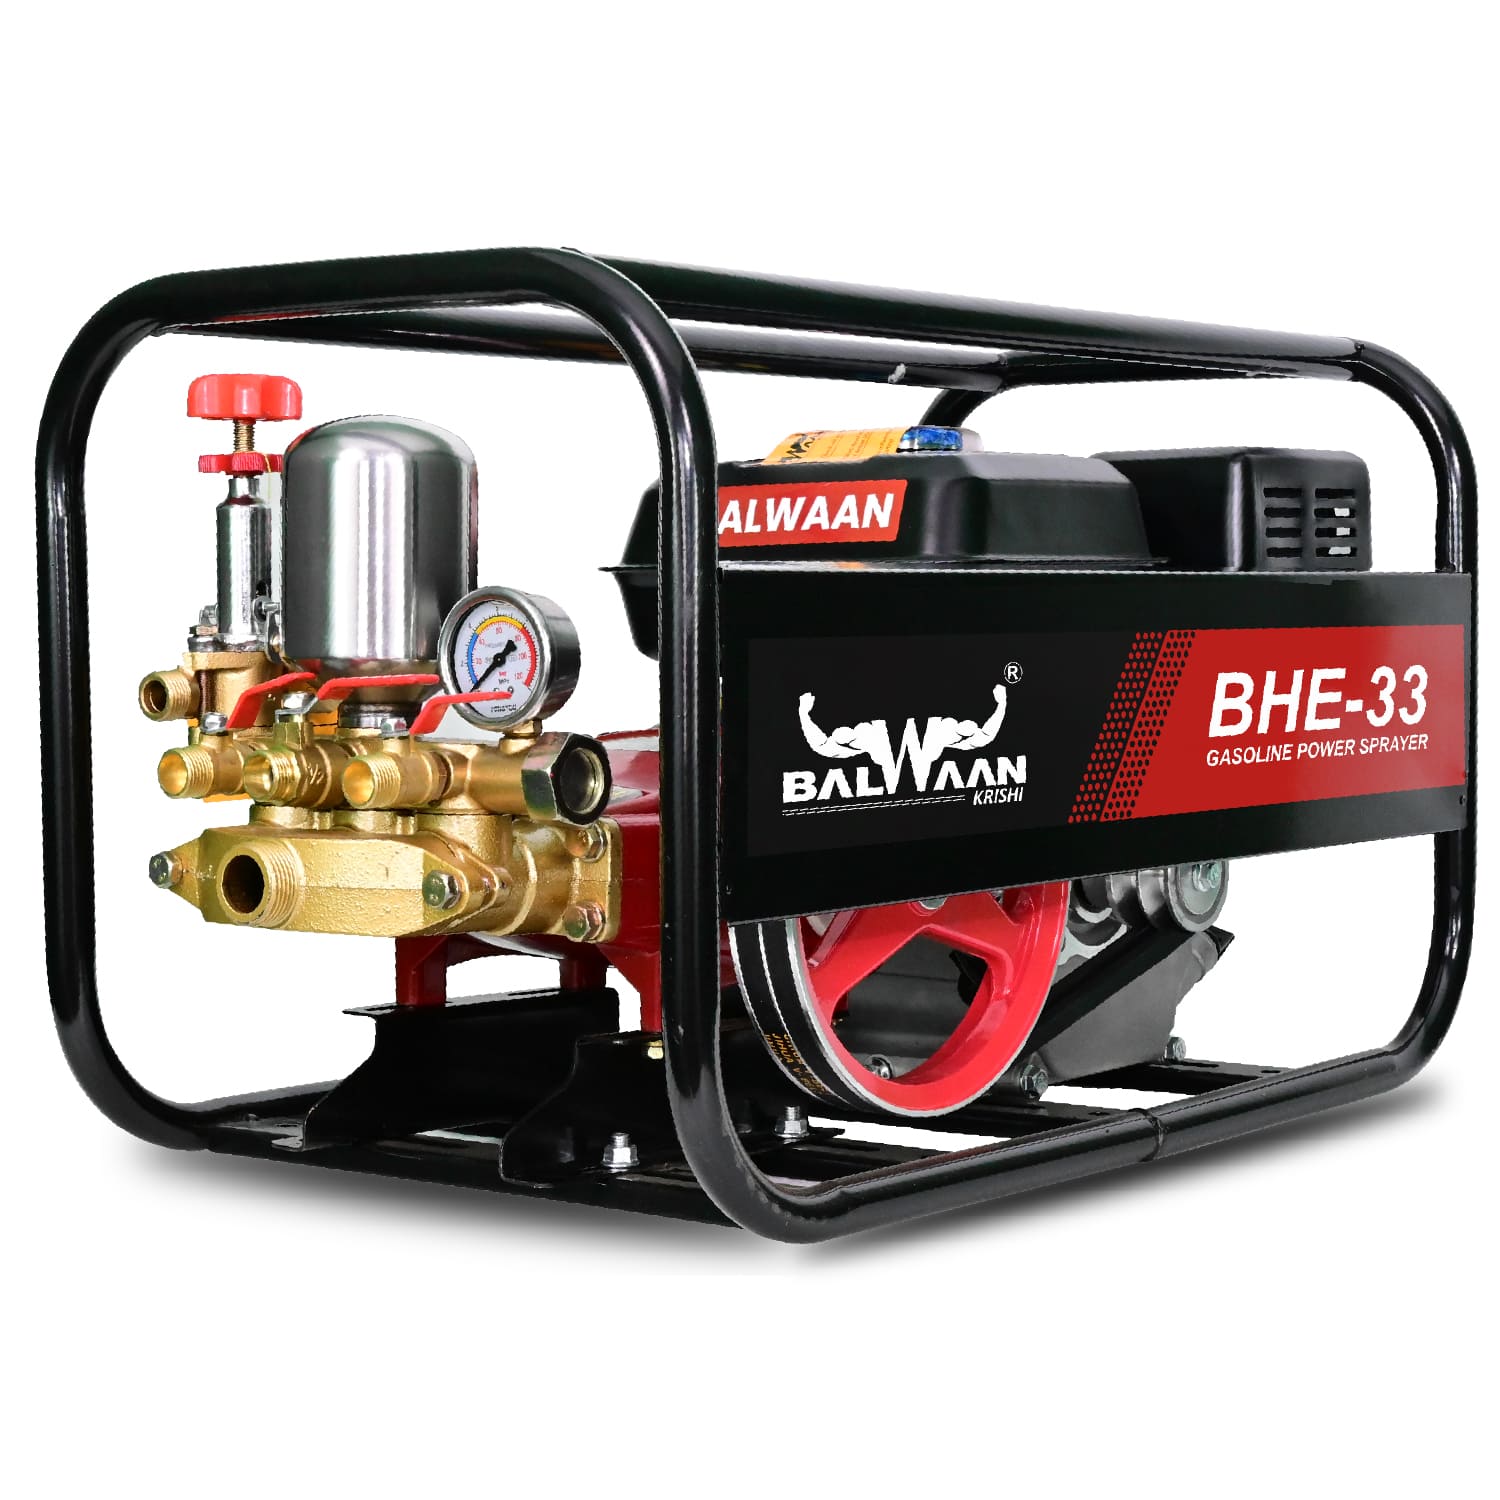 Balwaan 33 No. HTP Sprayer with 6.5HP Engine & 50 Mtr. Hose|BHE-33